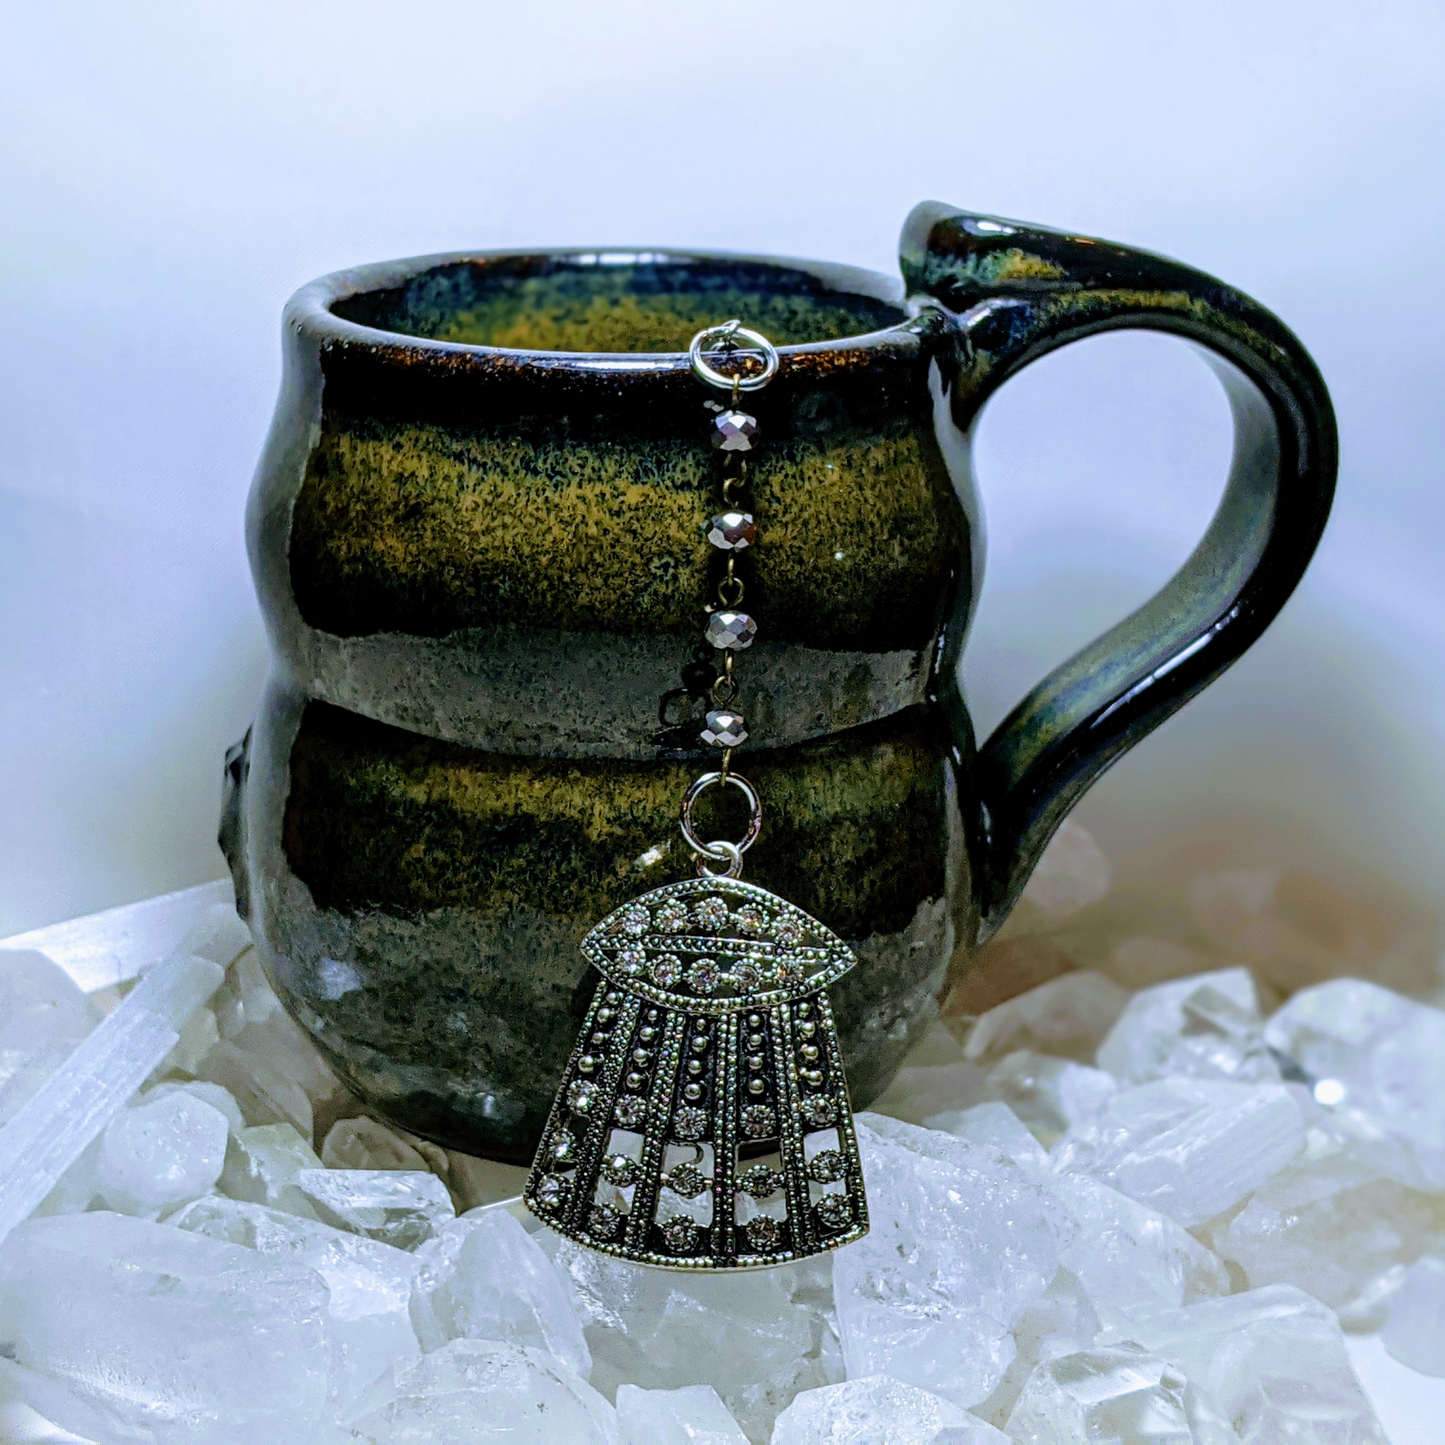 Dress Your Tea Teabling (tea infusion charm)